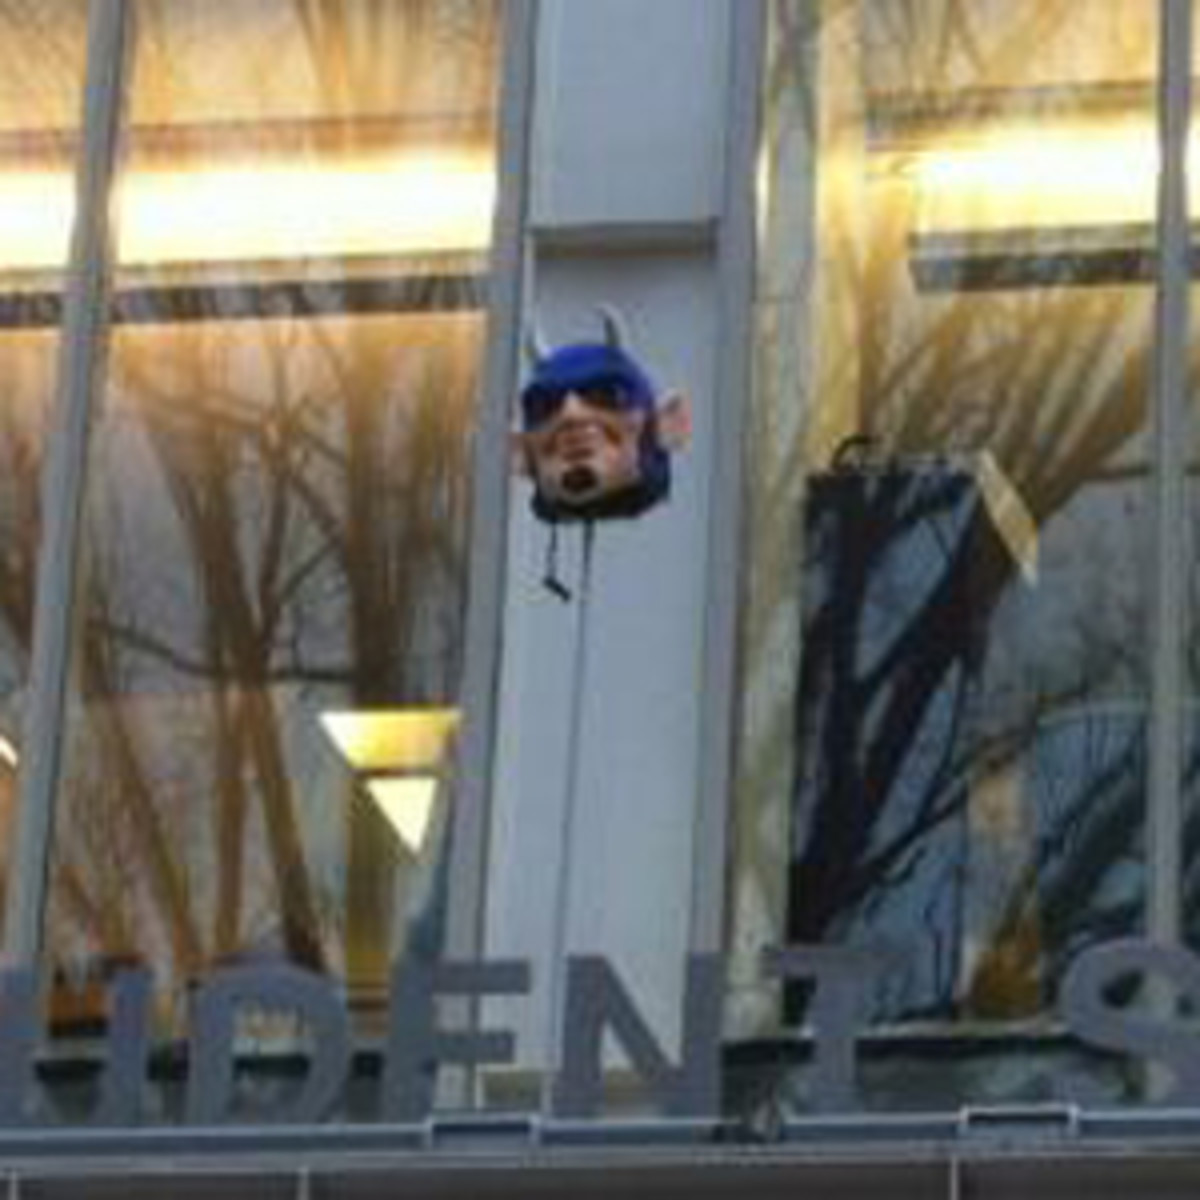 A stolen Duke Blue Devils mascot head appeared on a pole above a University of North Carolina campus book store.